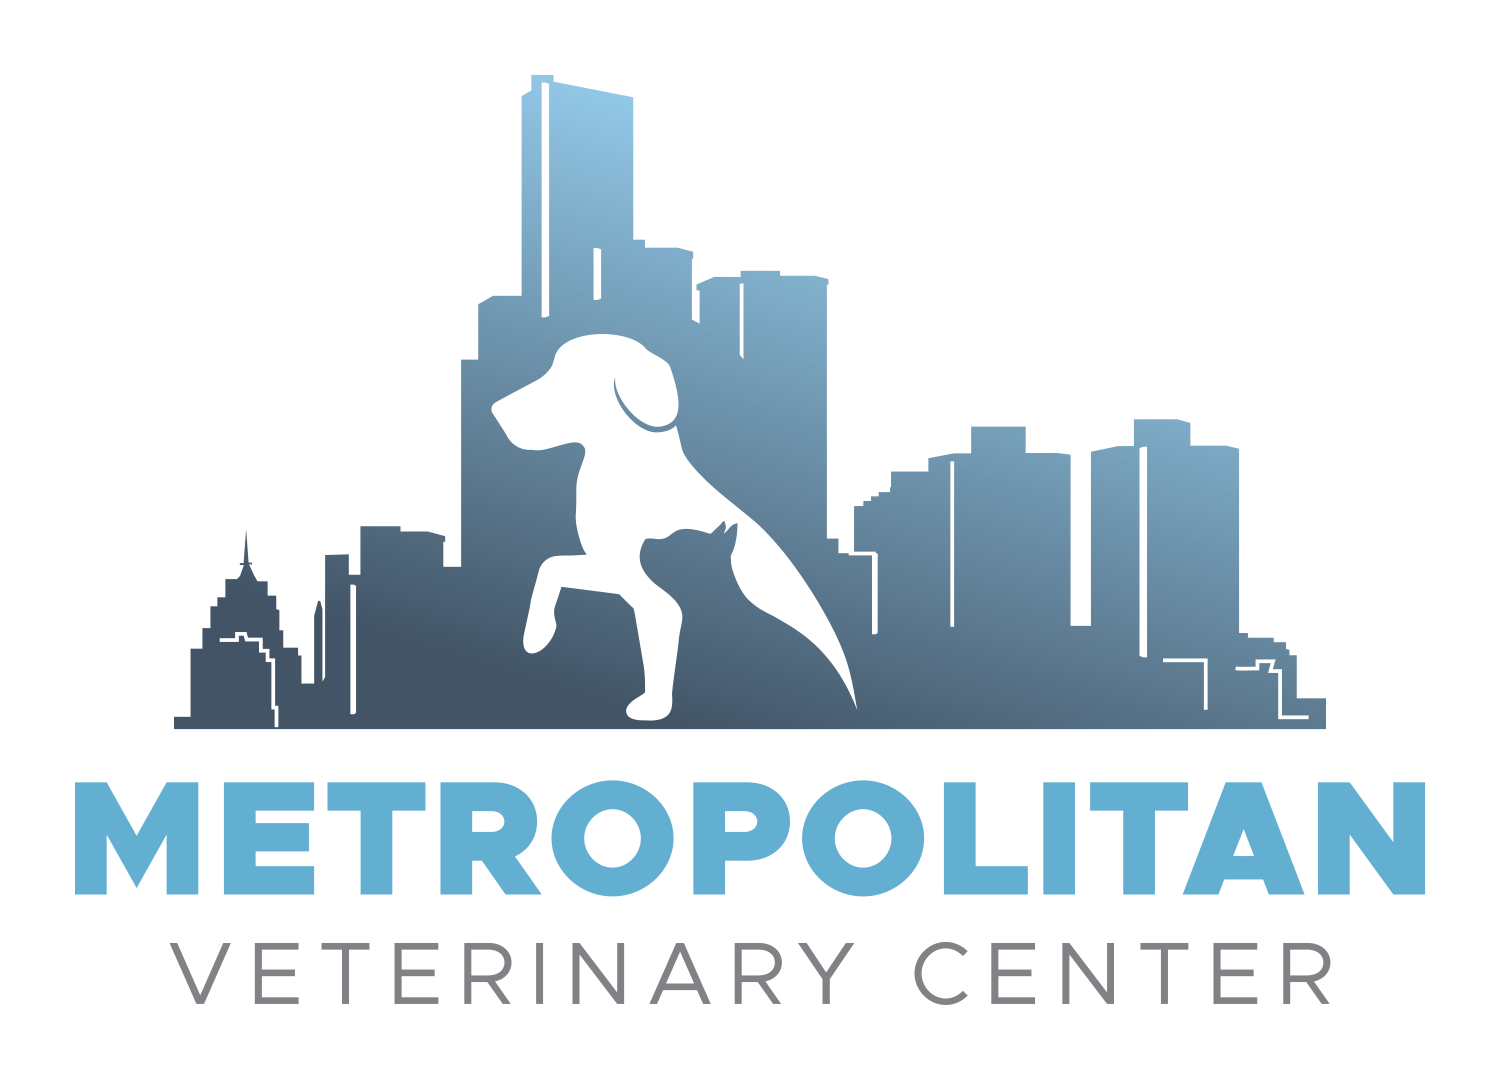 Metropolitan Veterinary Center